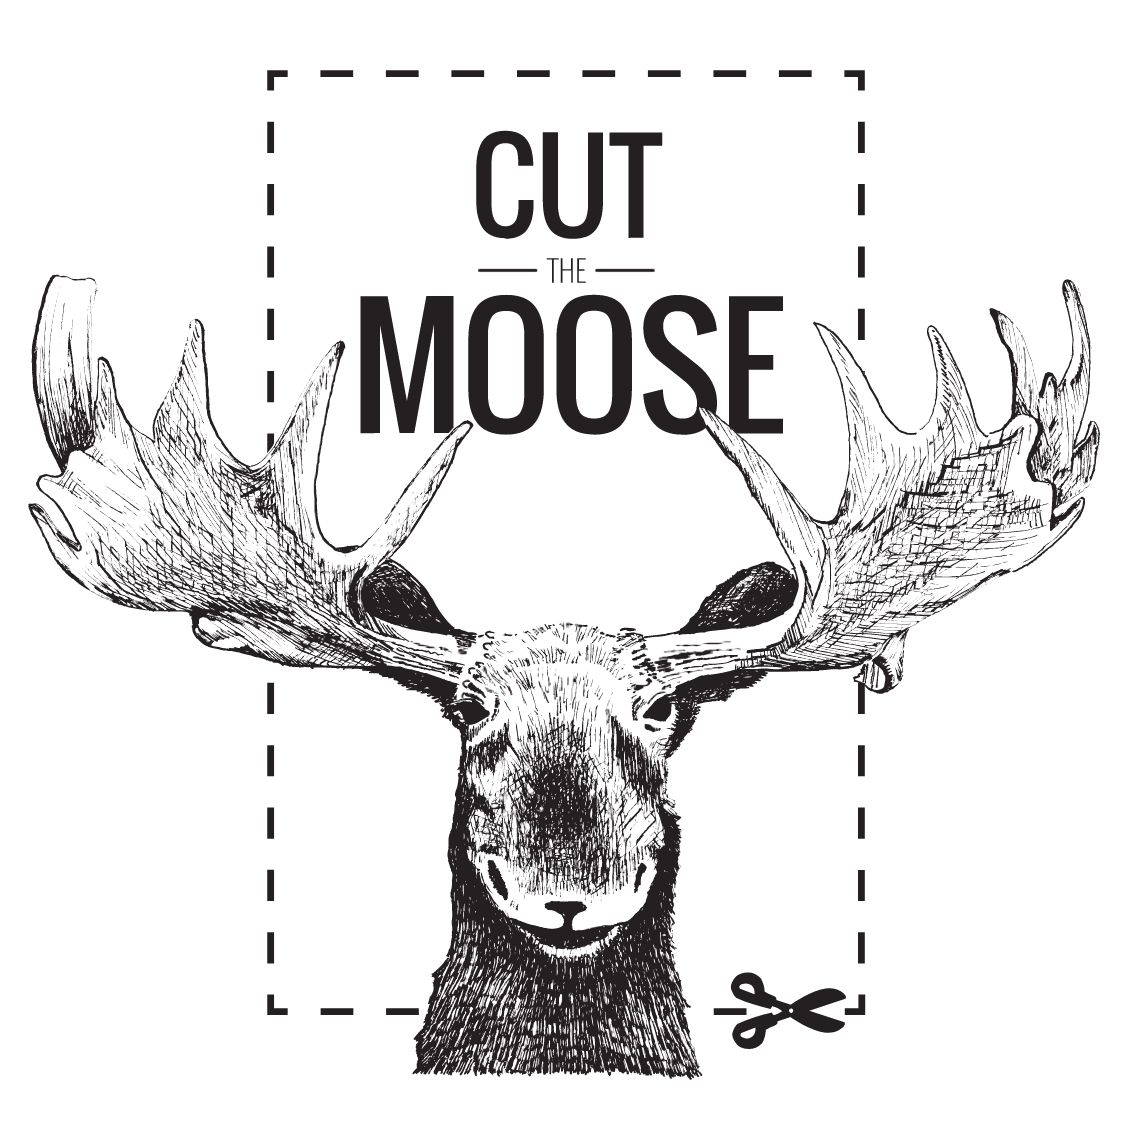 Cut Moose